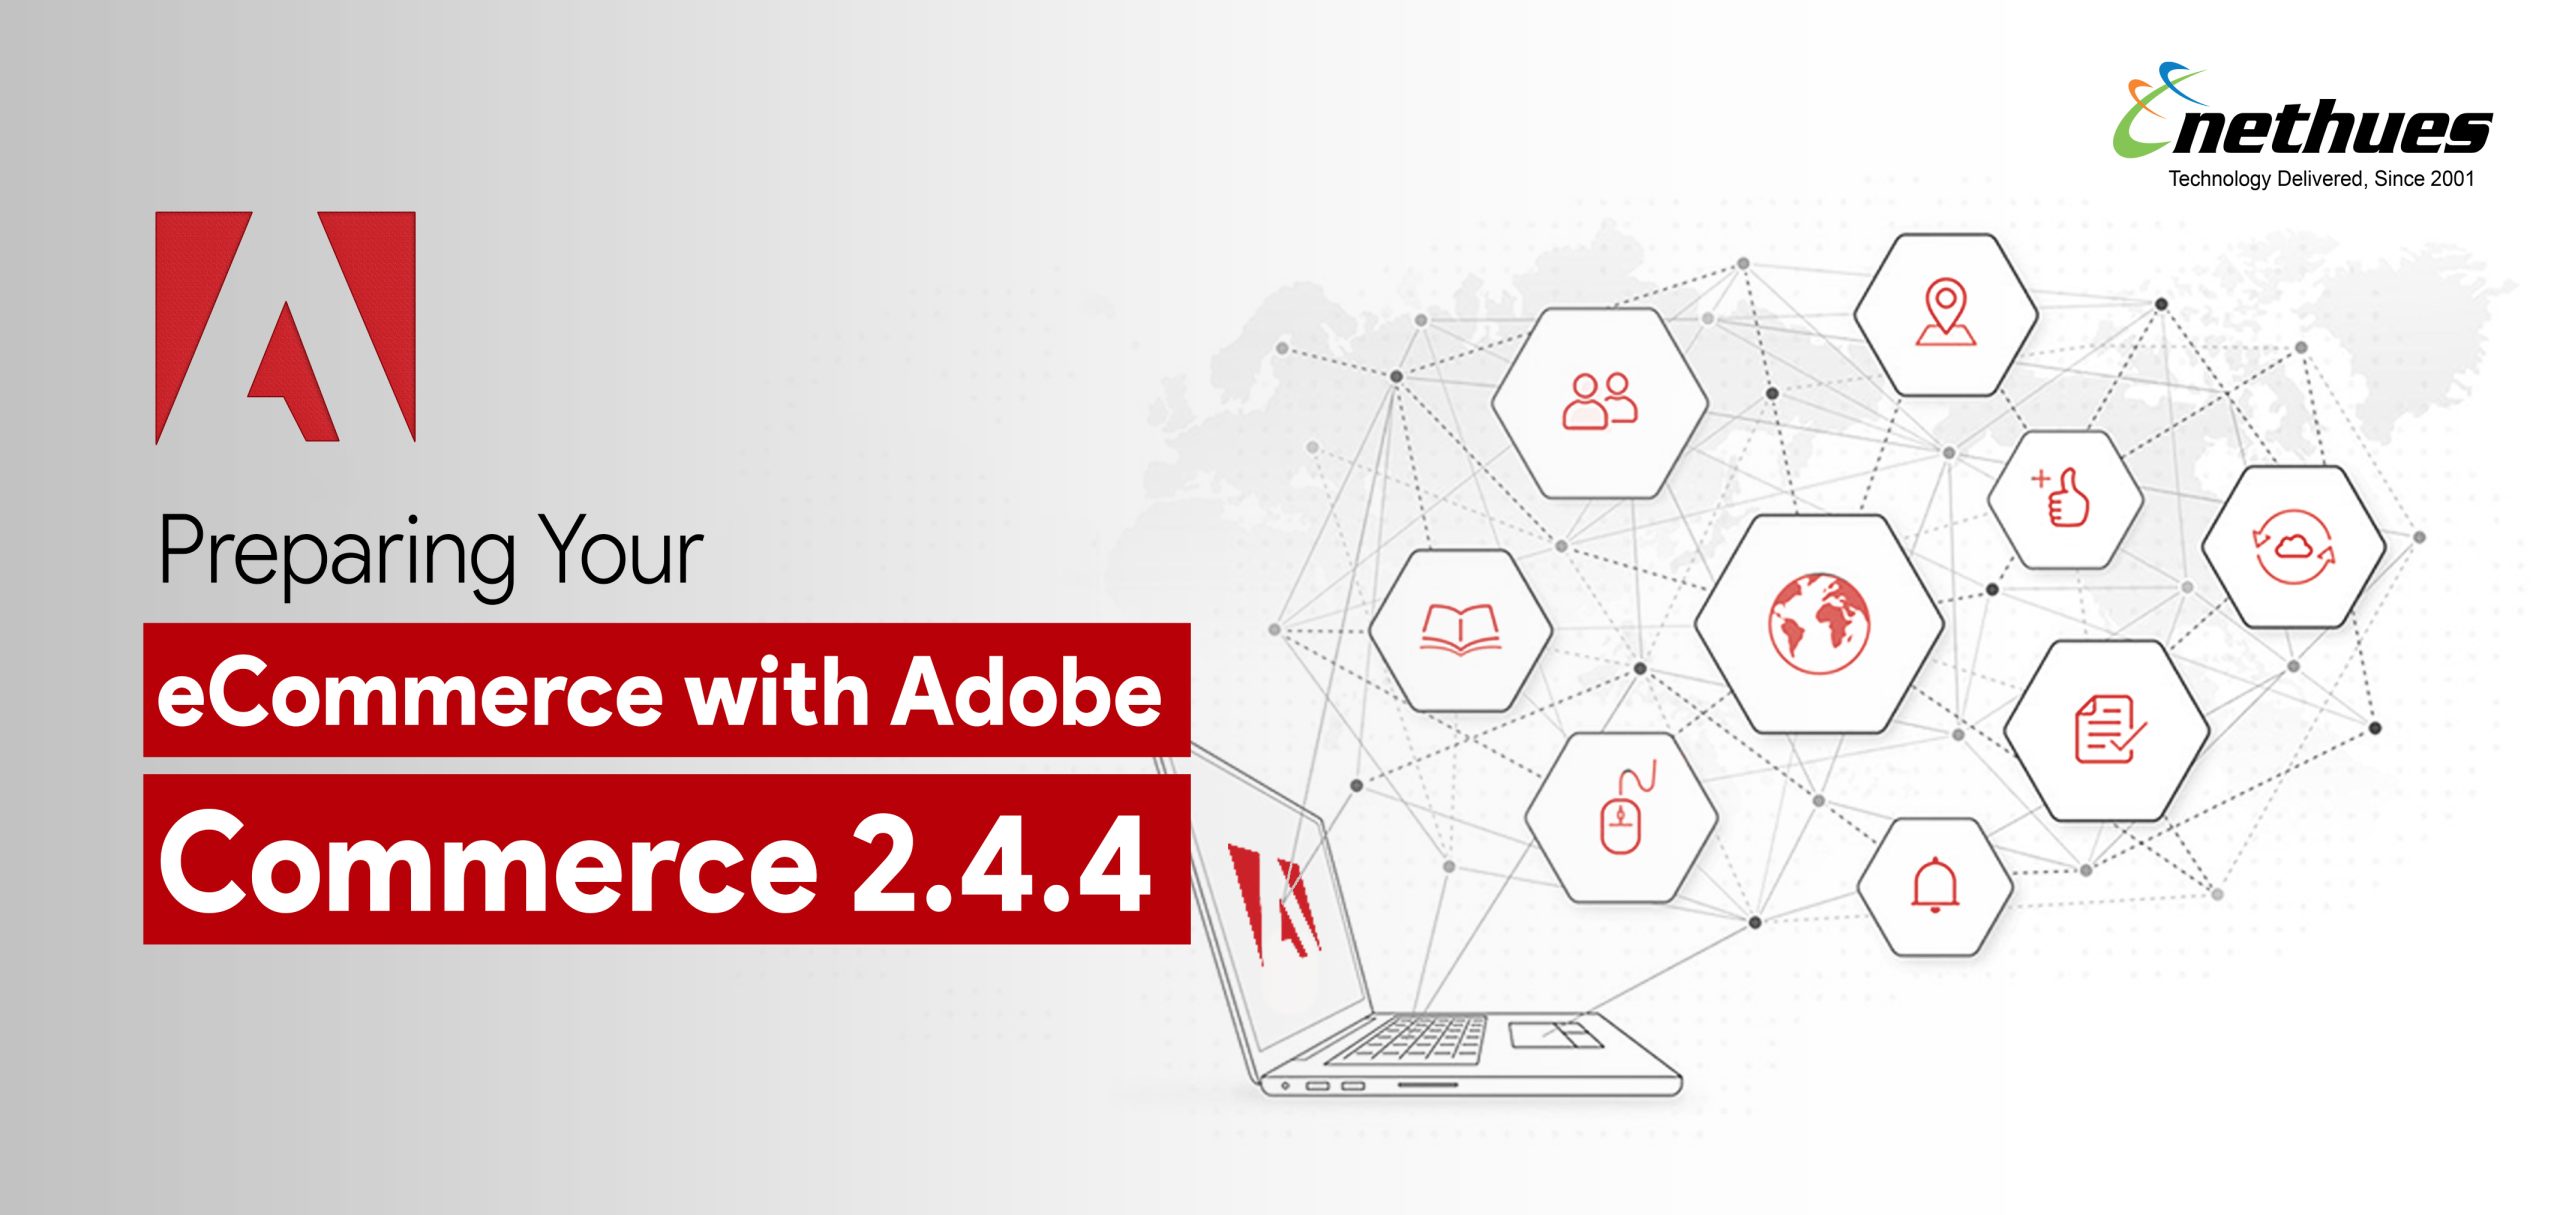 Adobe Commerce 2.4.4 Nethues